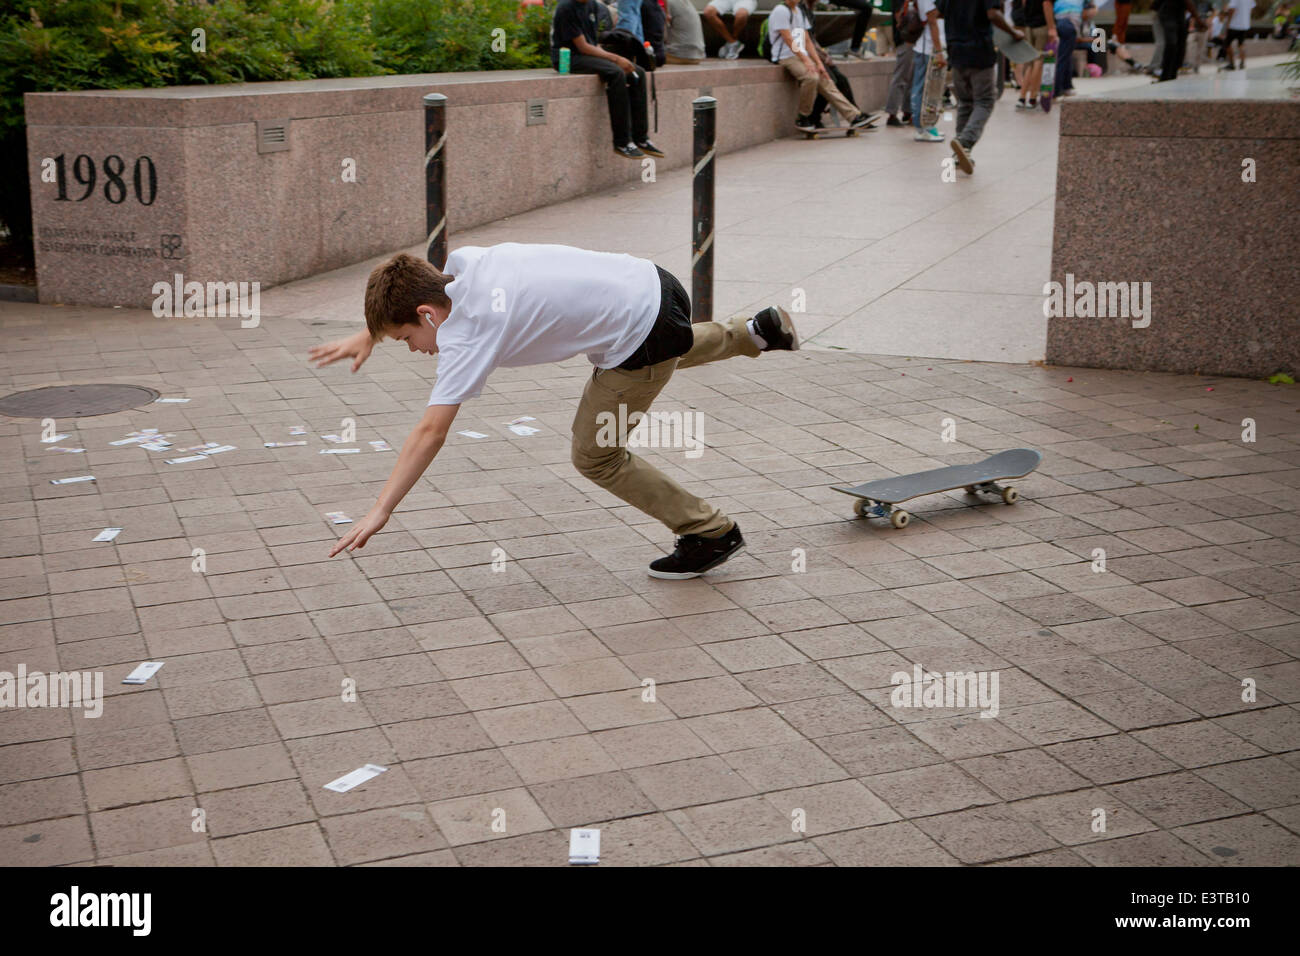 Street skateboarder falling from jump - USA Stock Photo